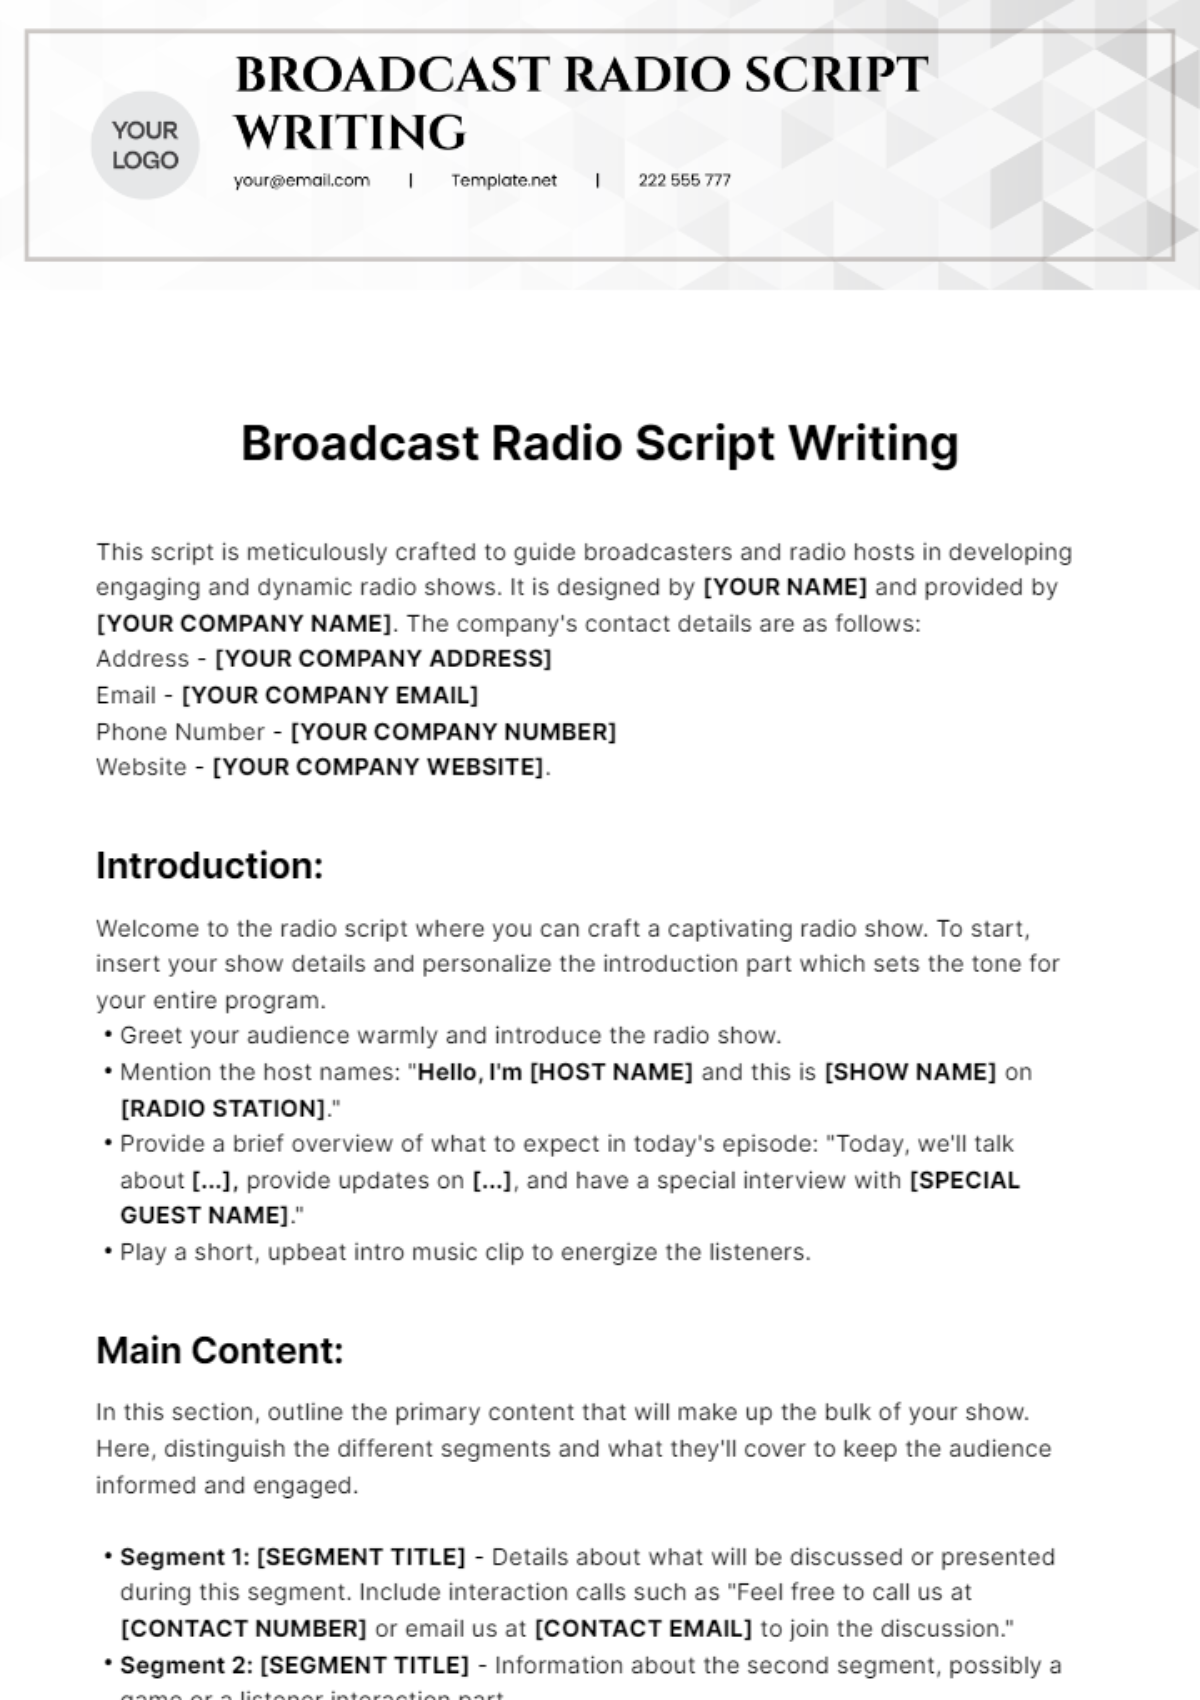 Free Broadcast Radio Script Writing Template